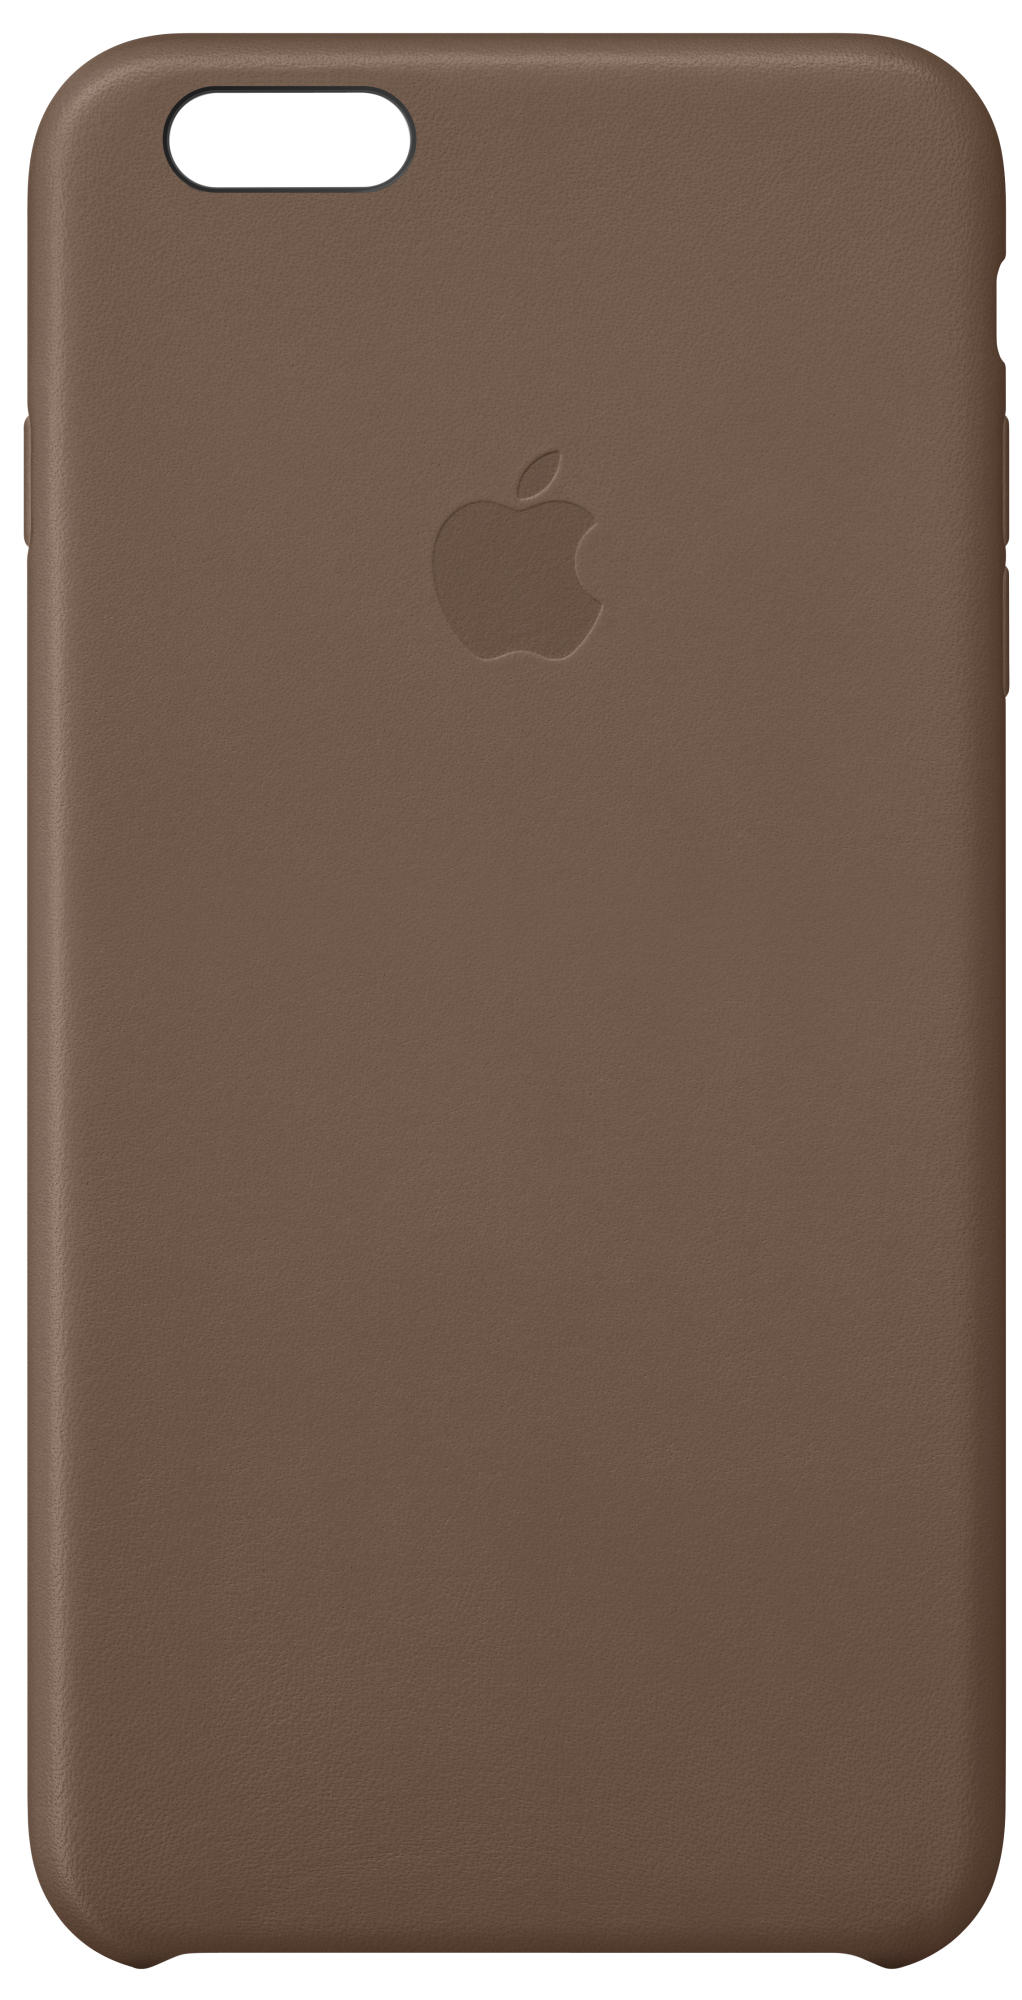 MGQR2ZM/A, APPLE Backcover, 6 iPhone Braun Apple, Plus,